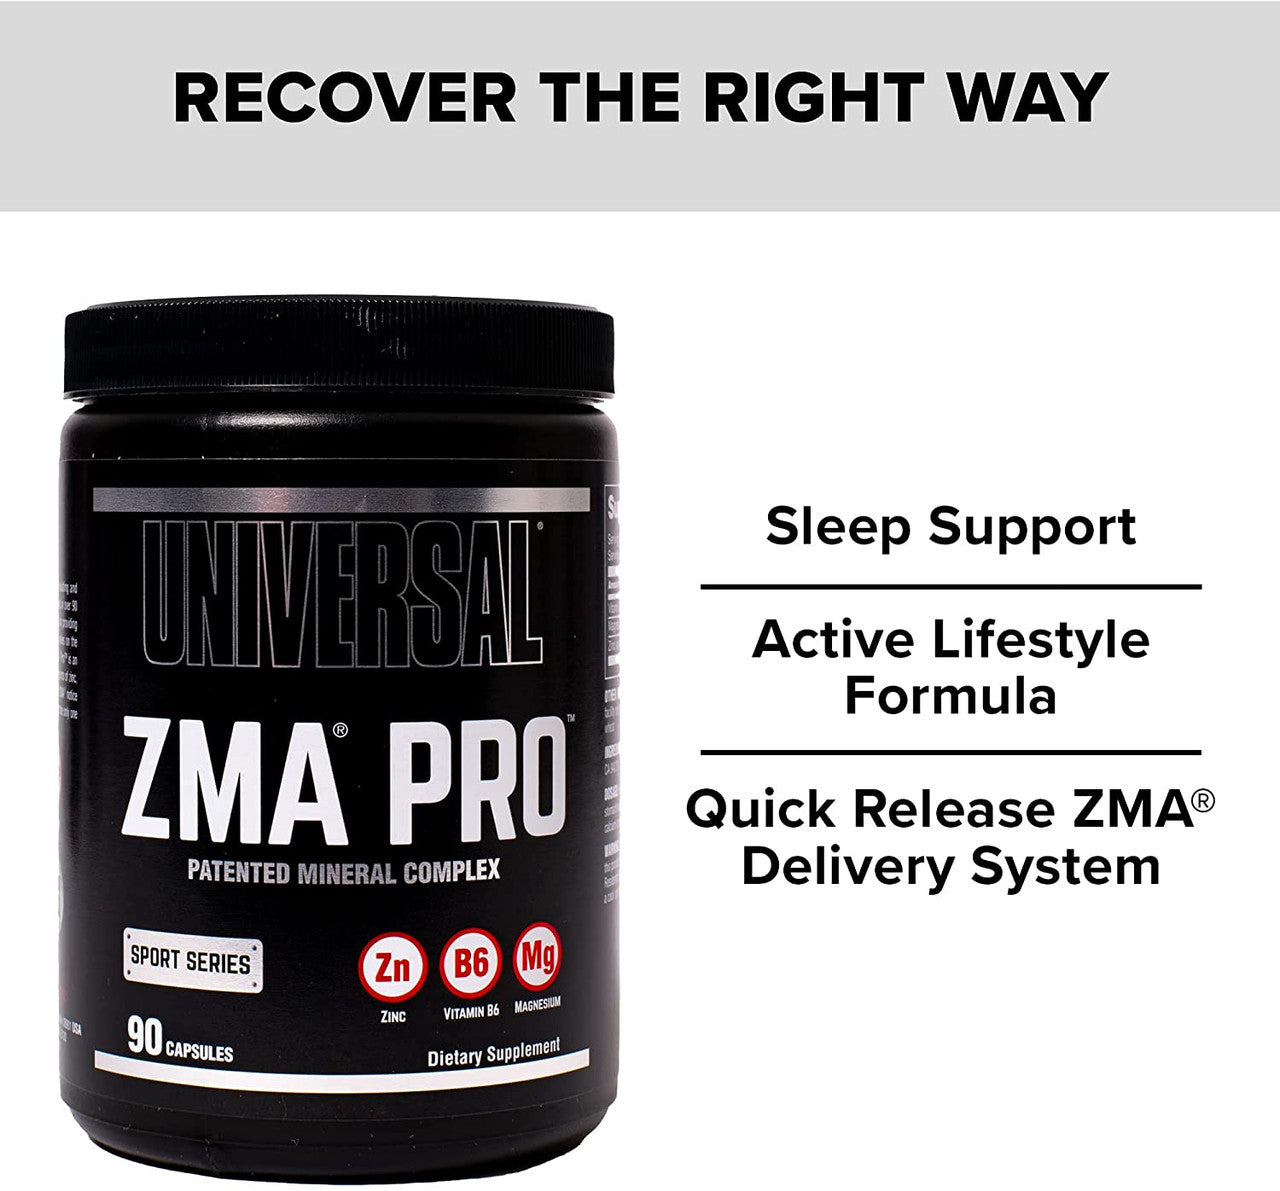 Universal Nutrition ZMA Pro Benefits